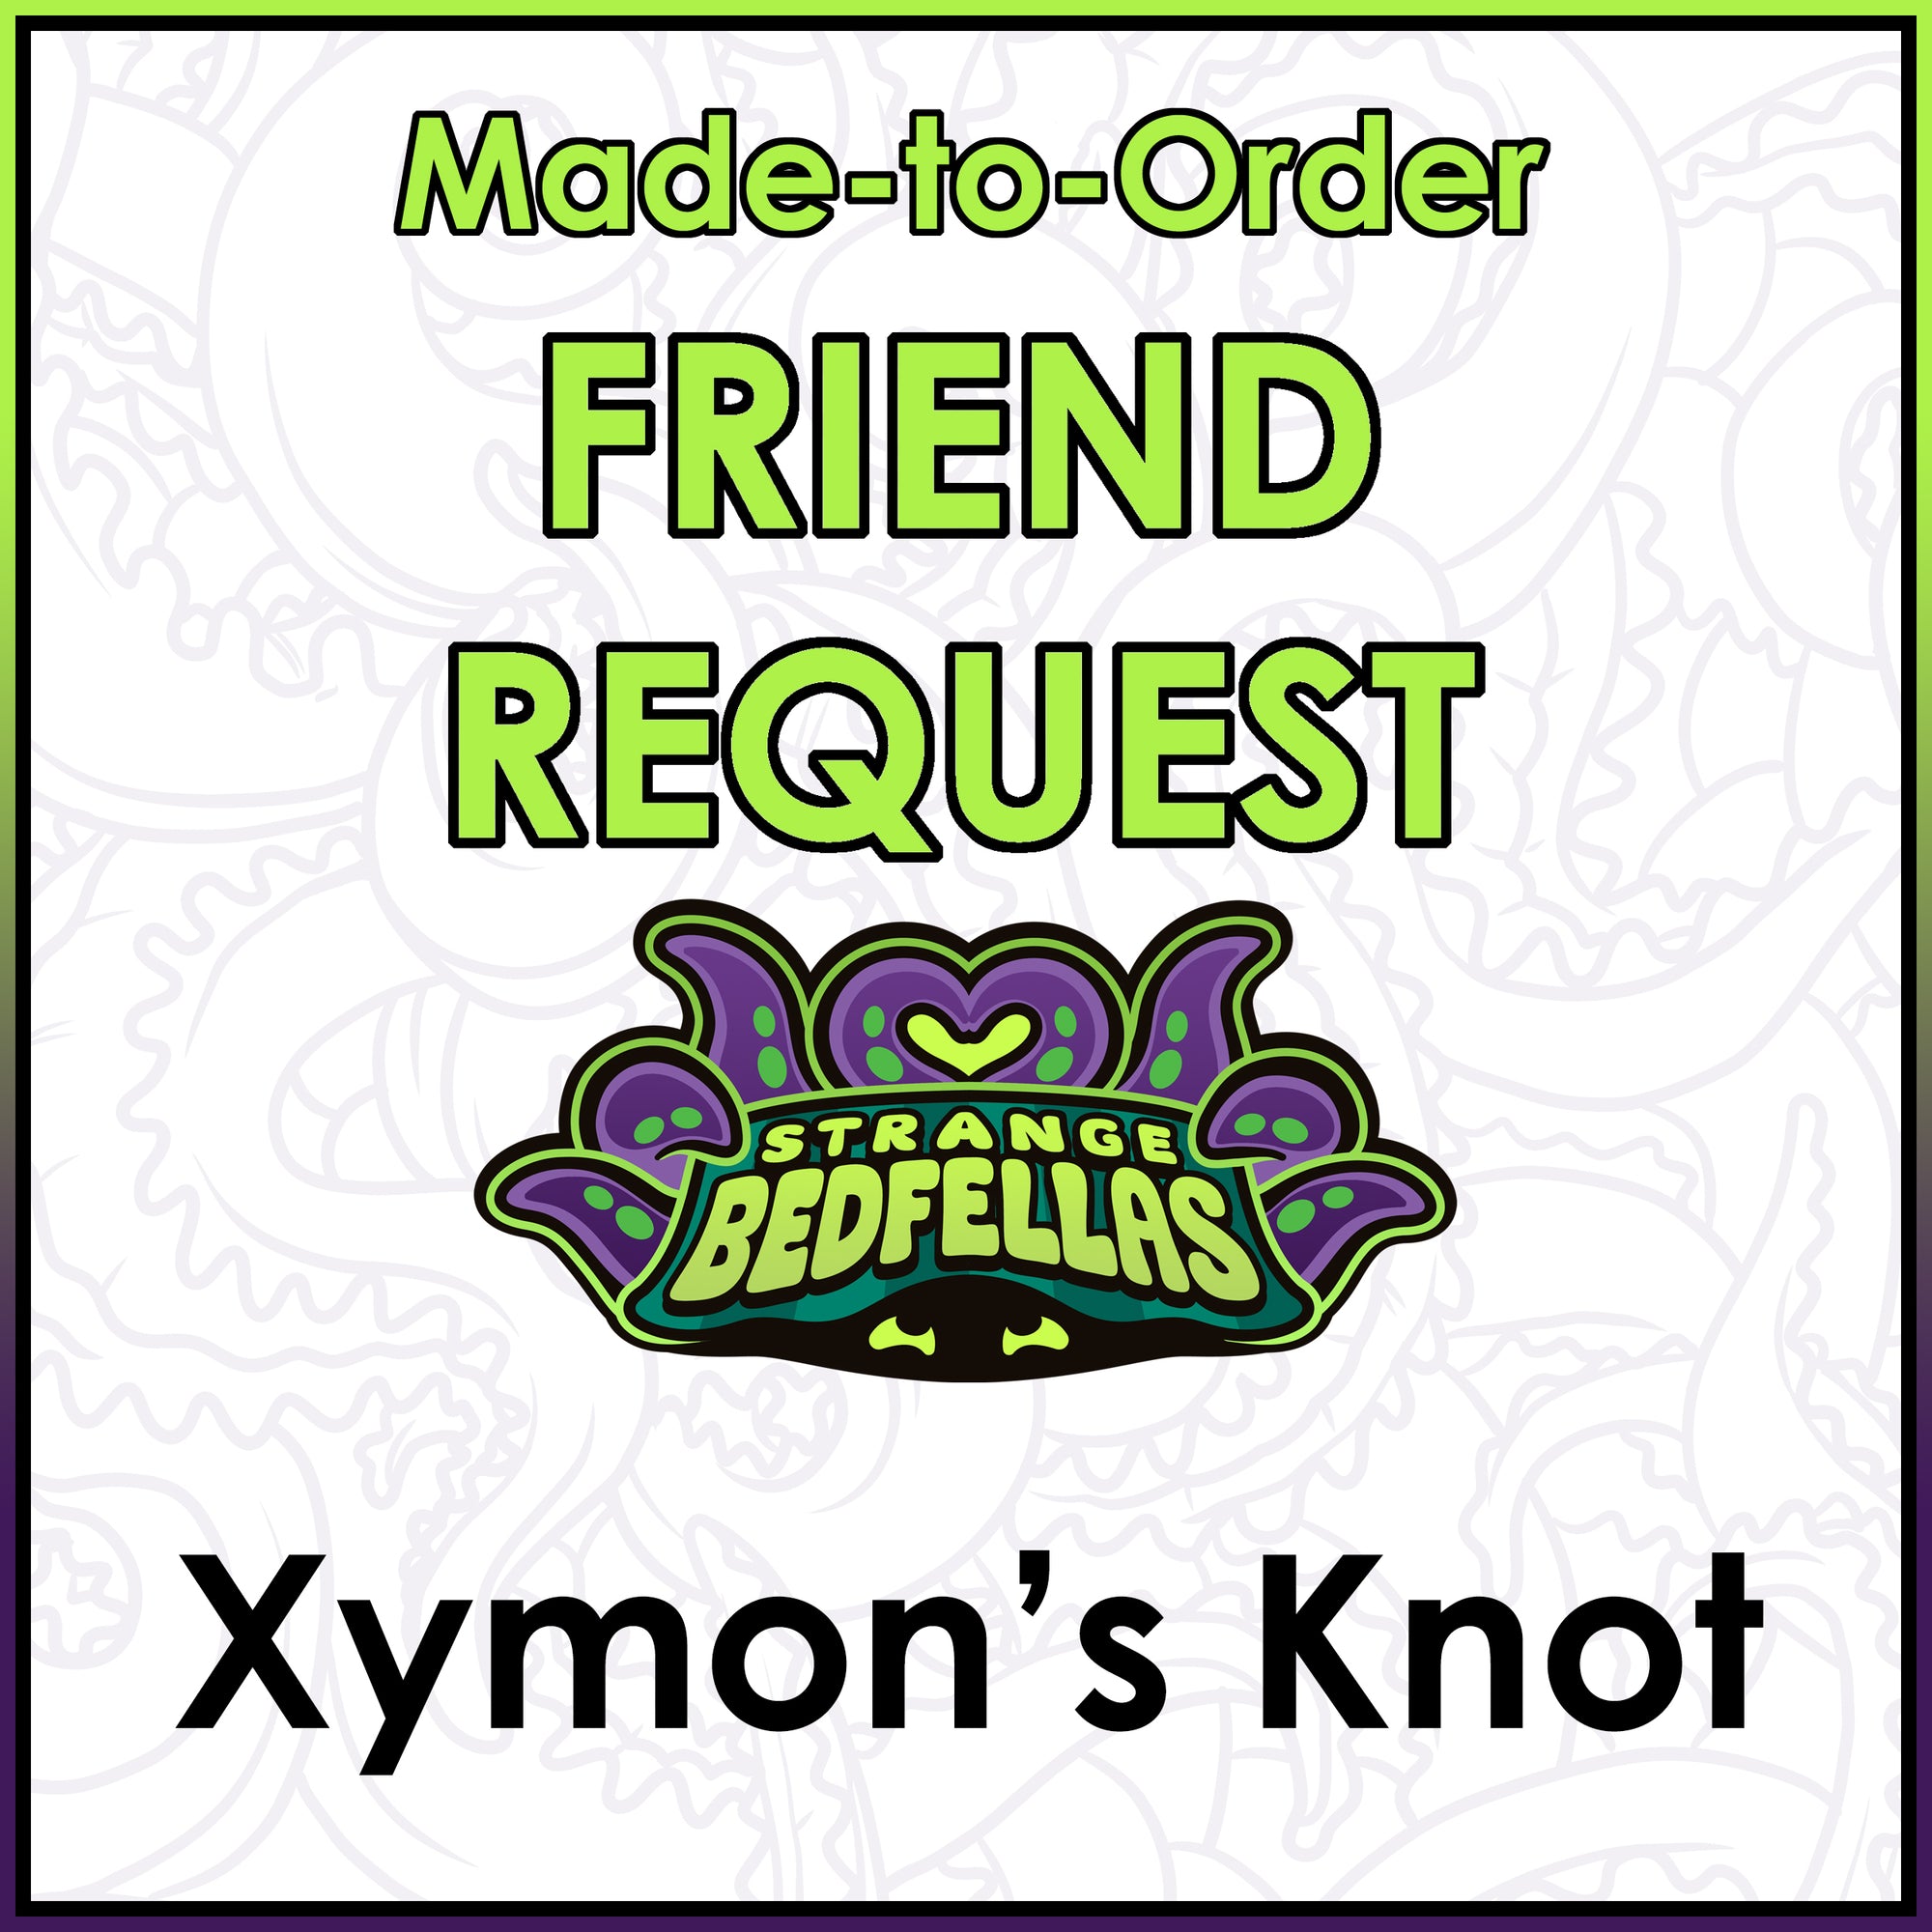 Friend Request - Xymon's Knot